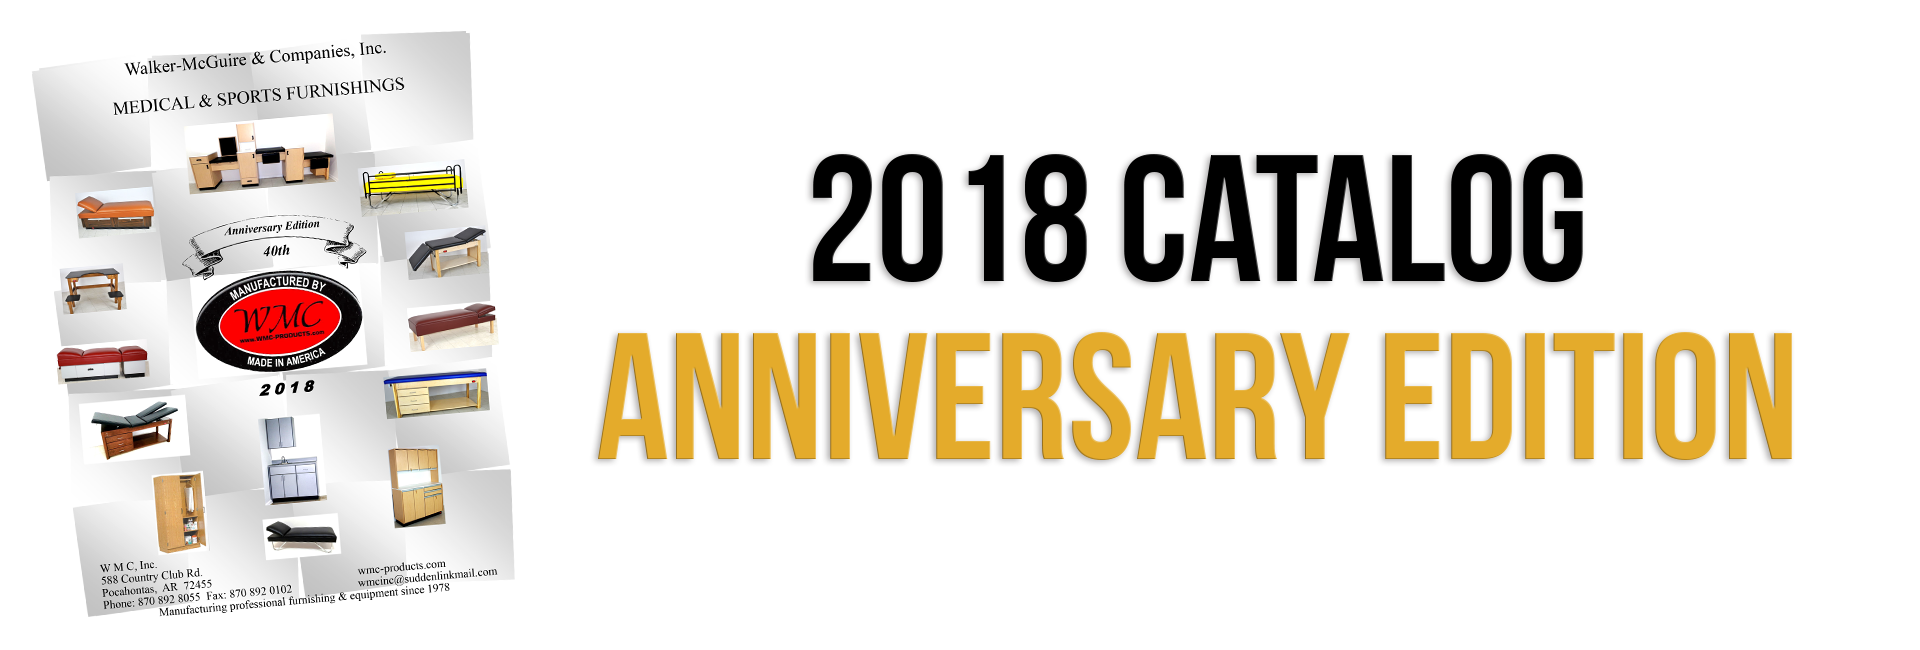 2018 Catalog Anniversary Edition Banner